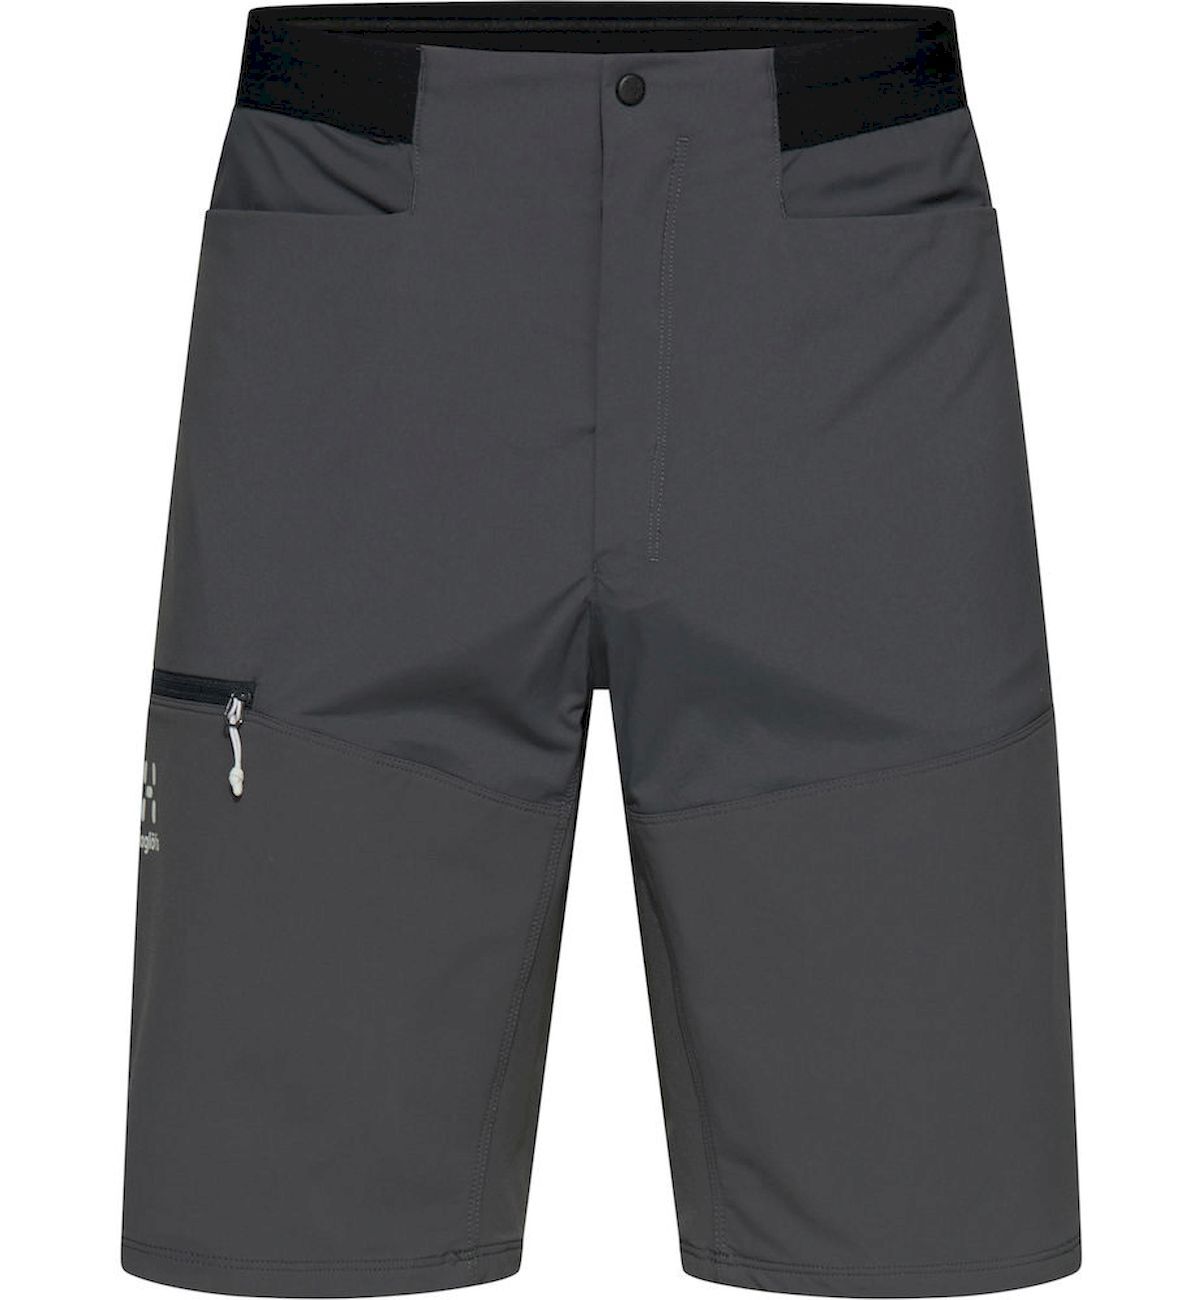 Haglöfs L.I.M Rugged Shorts - Walking shorts - Men's